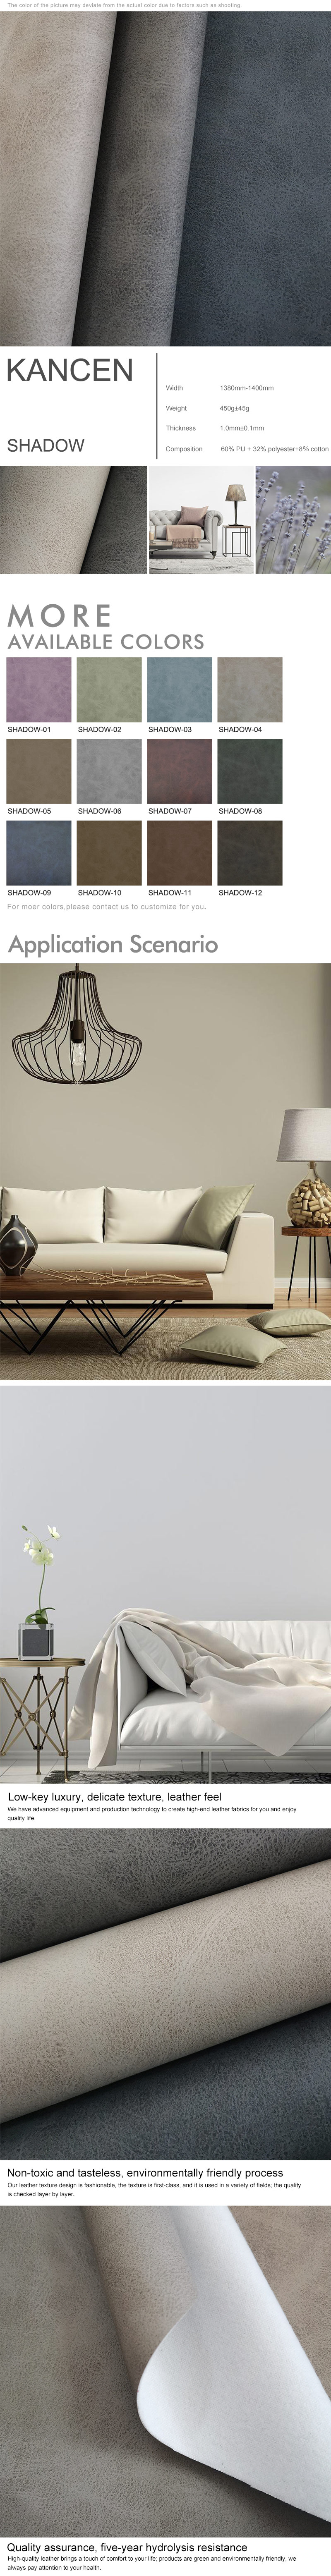 DMF free sofa leather design - KANCEN